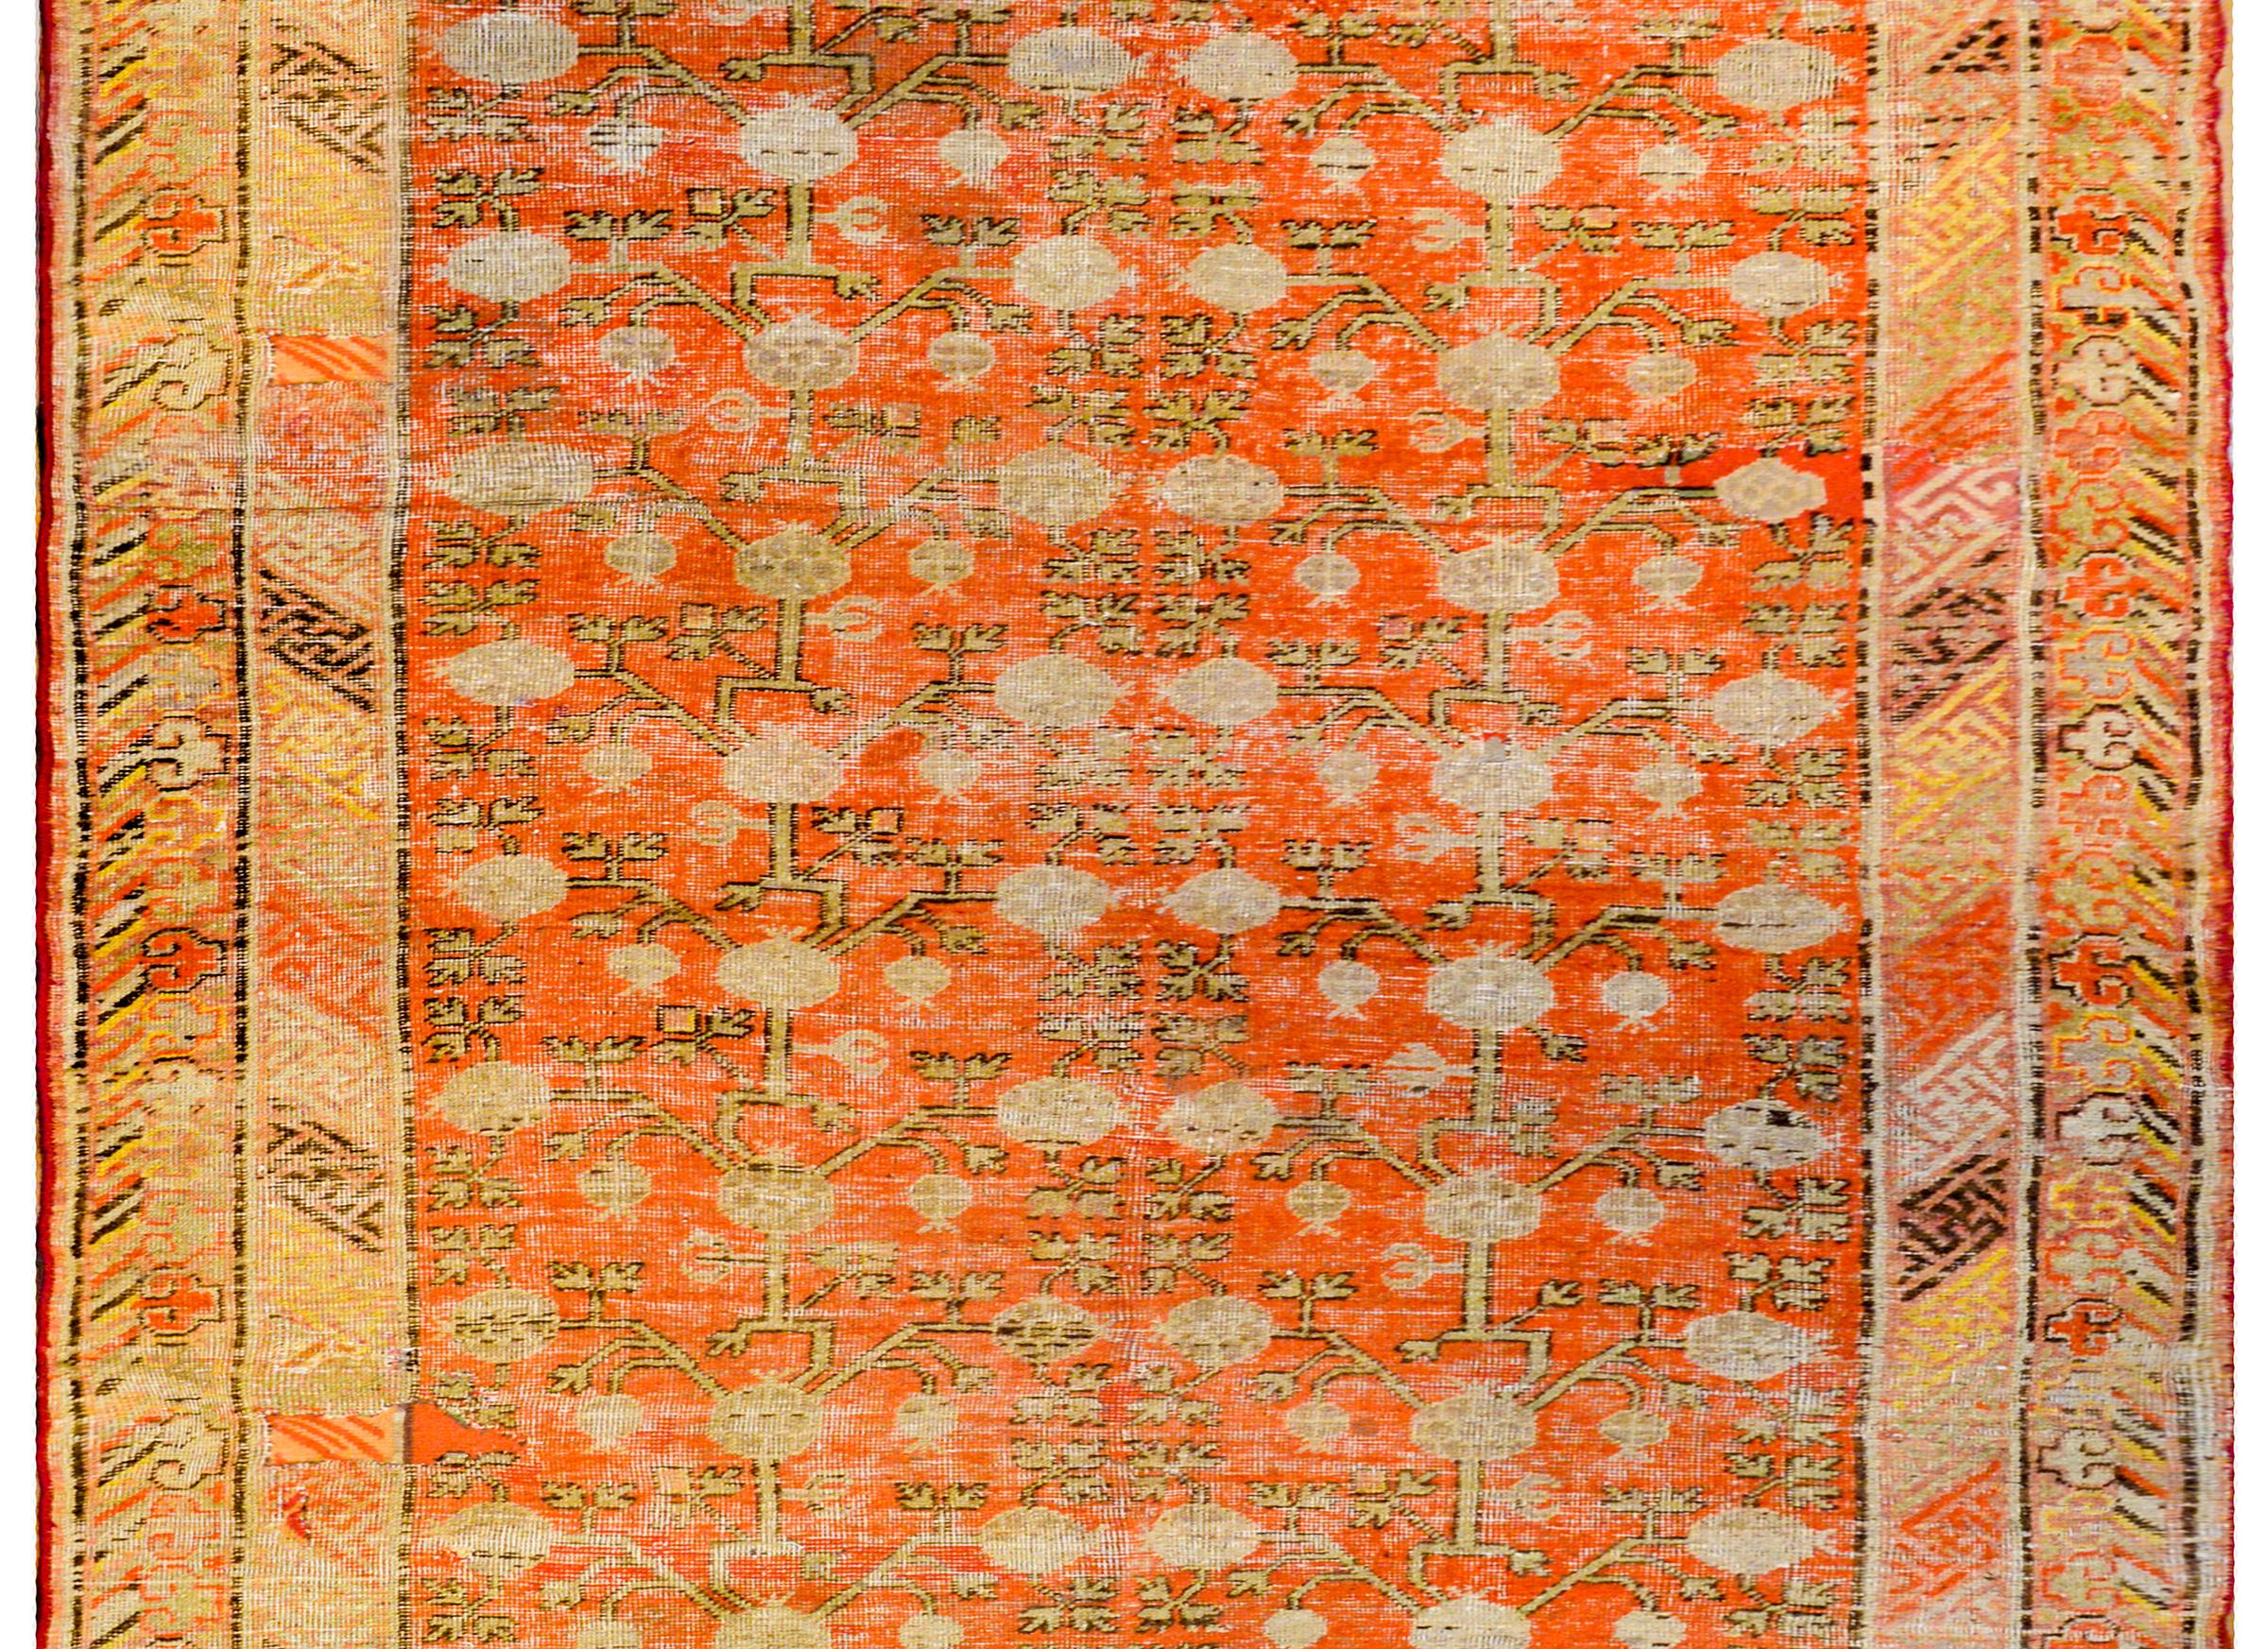 East Turkestani Wonderful Early 20th Century Central Asian Khotan Rug For Sale